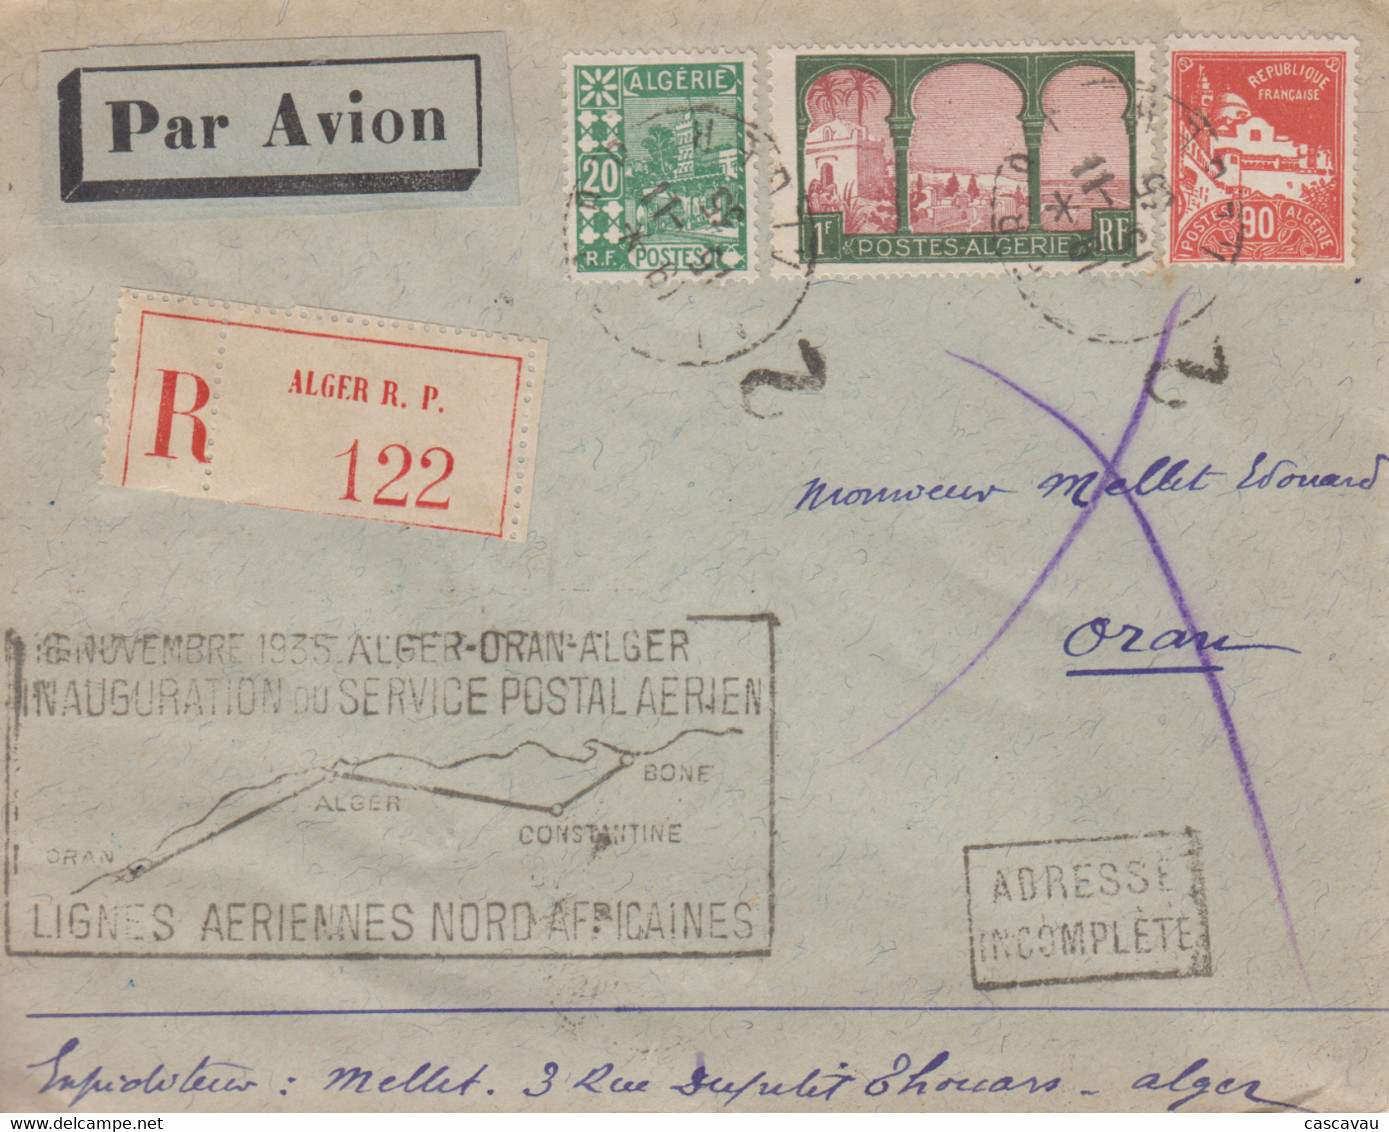 Enveloppe  Recommandée  ALGERIE   Inauguration   Service  Postal   Aérien    ALGER - ORAN - ALGER   1935 - Posta Aerea